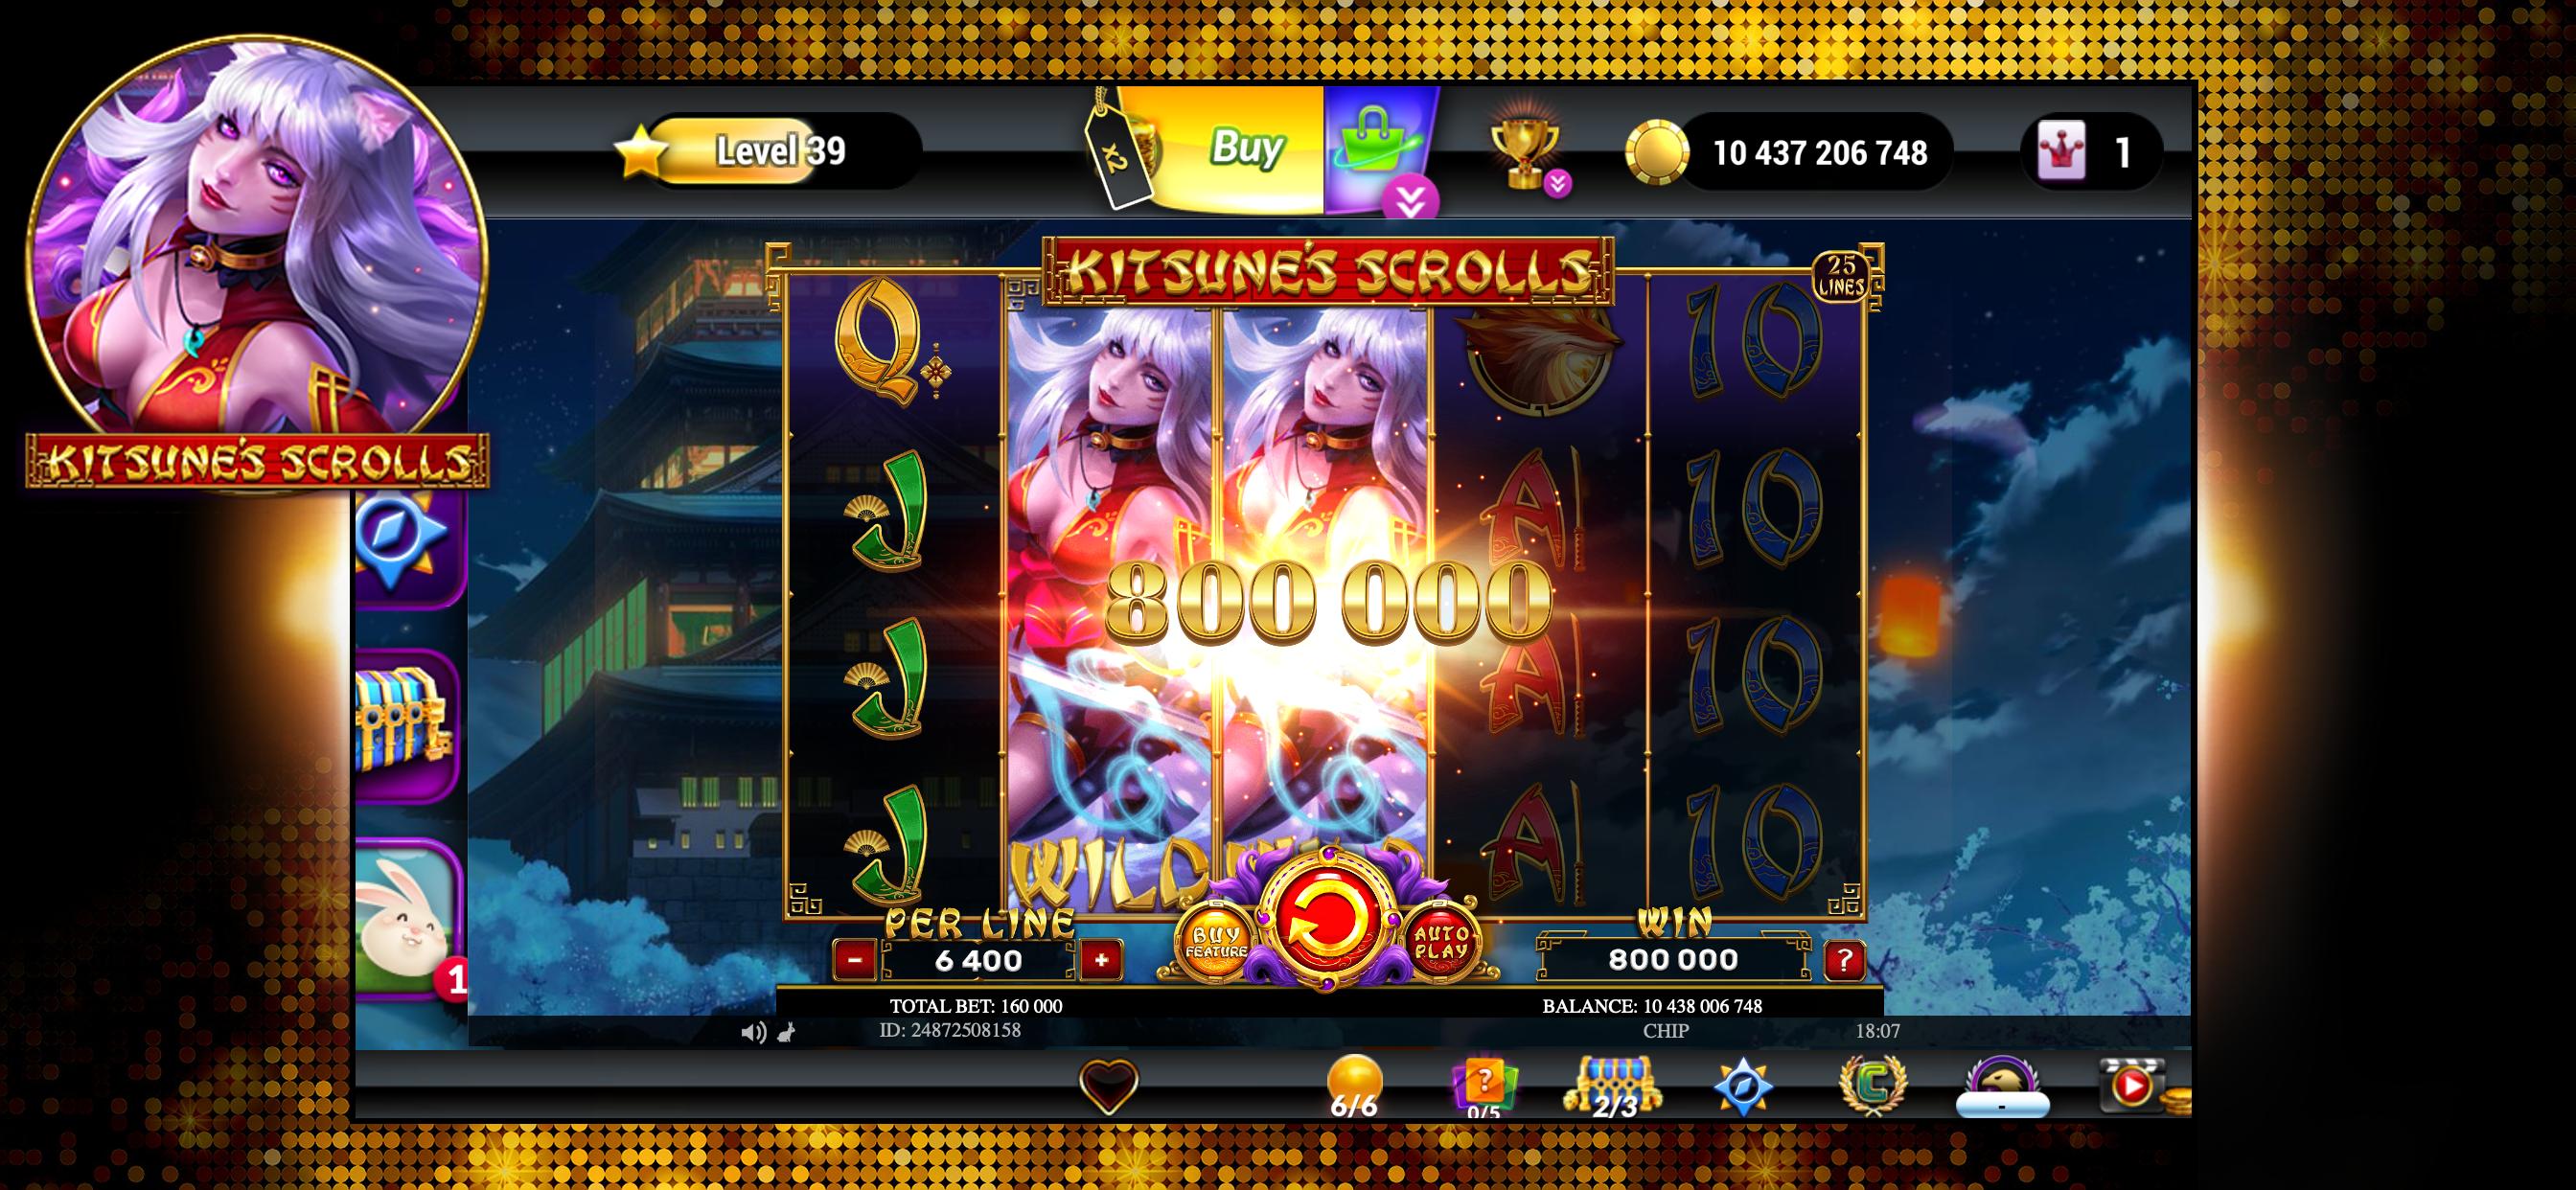 Lounge777 Online Casino 4.11.46 Screenshot 2